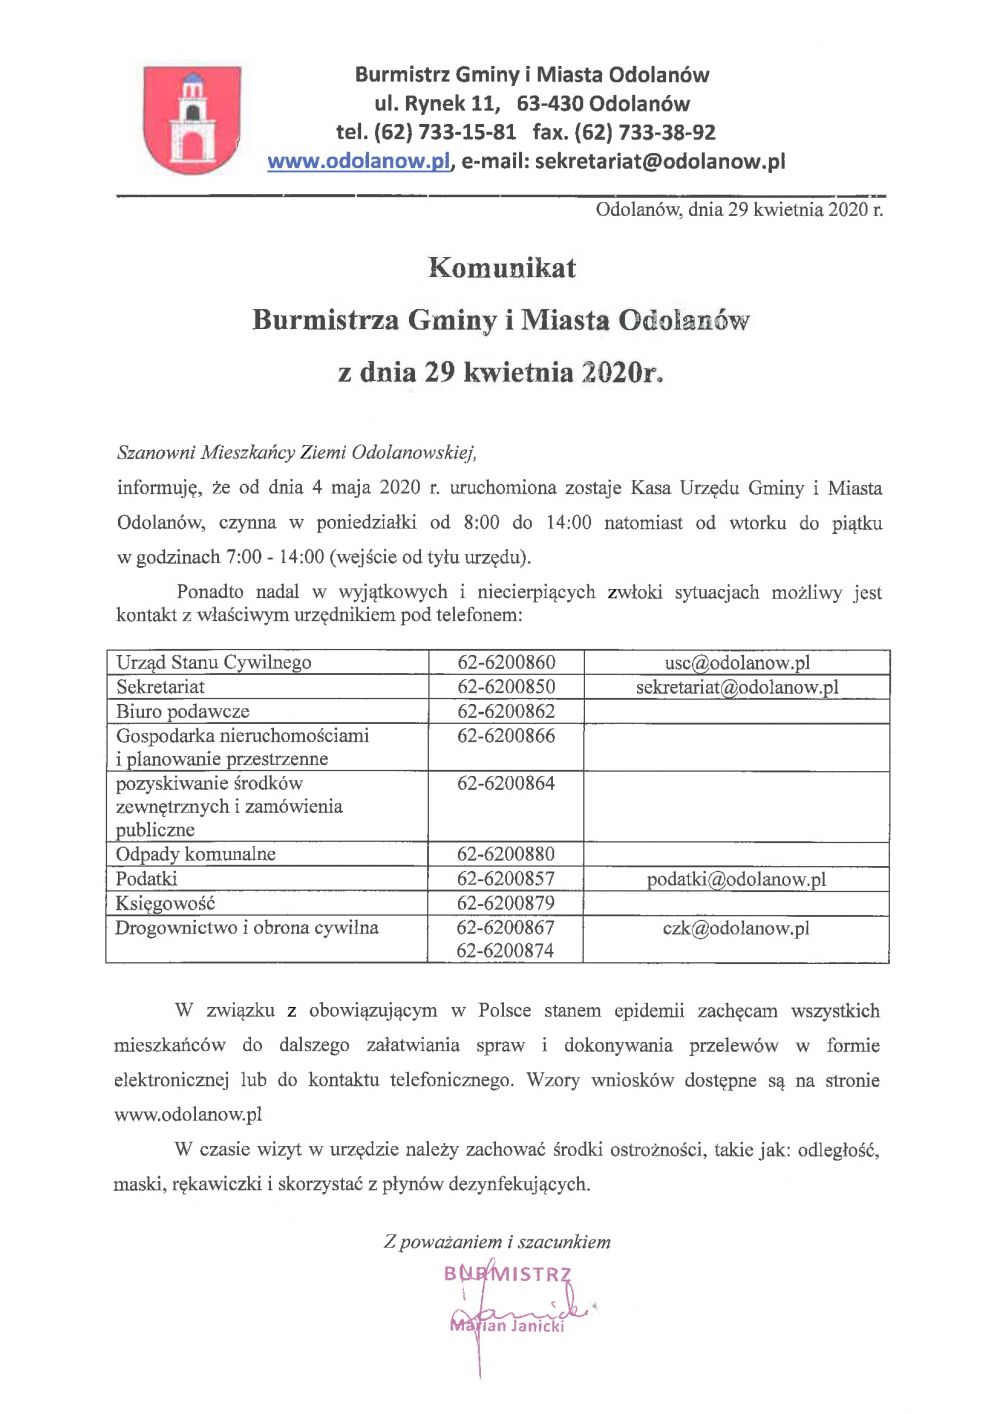 Komunikat Burmistrza z 29.04.2020r.